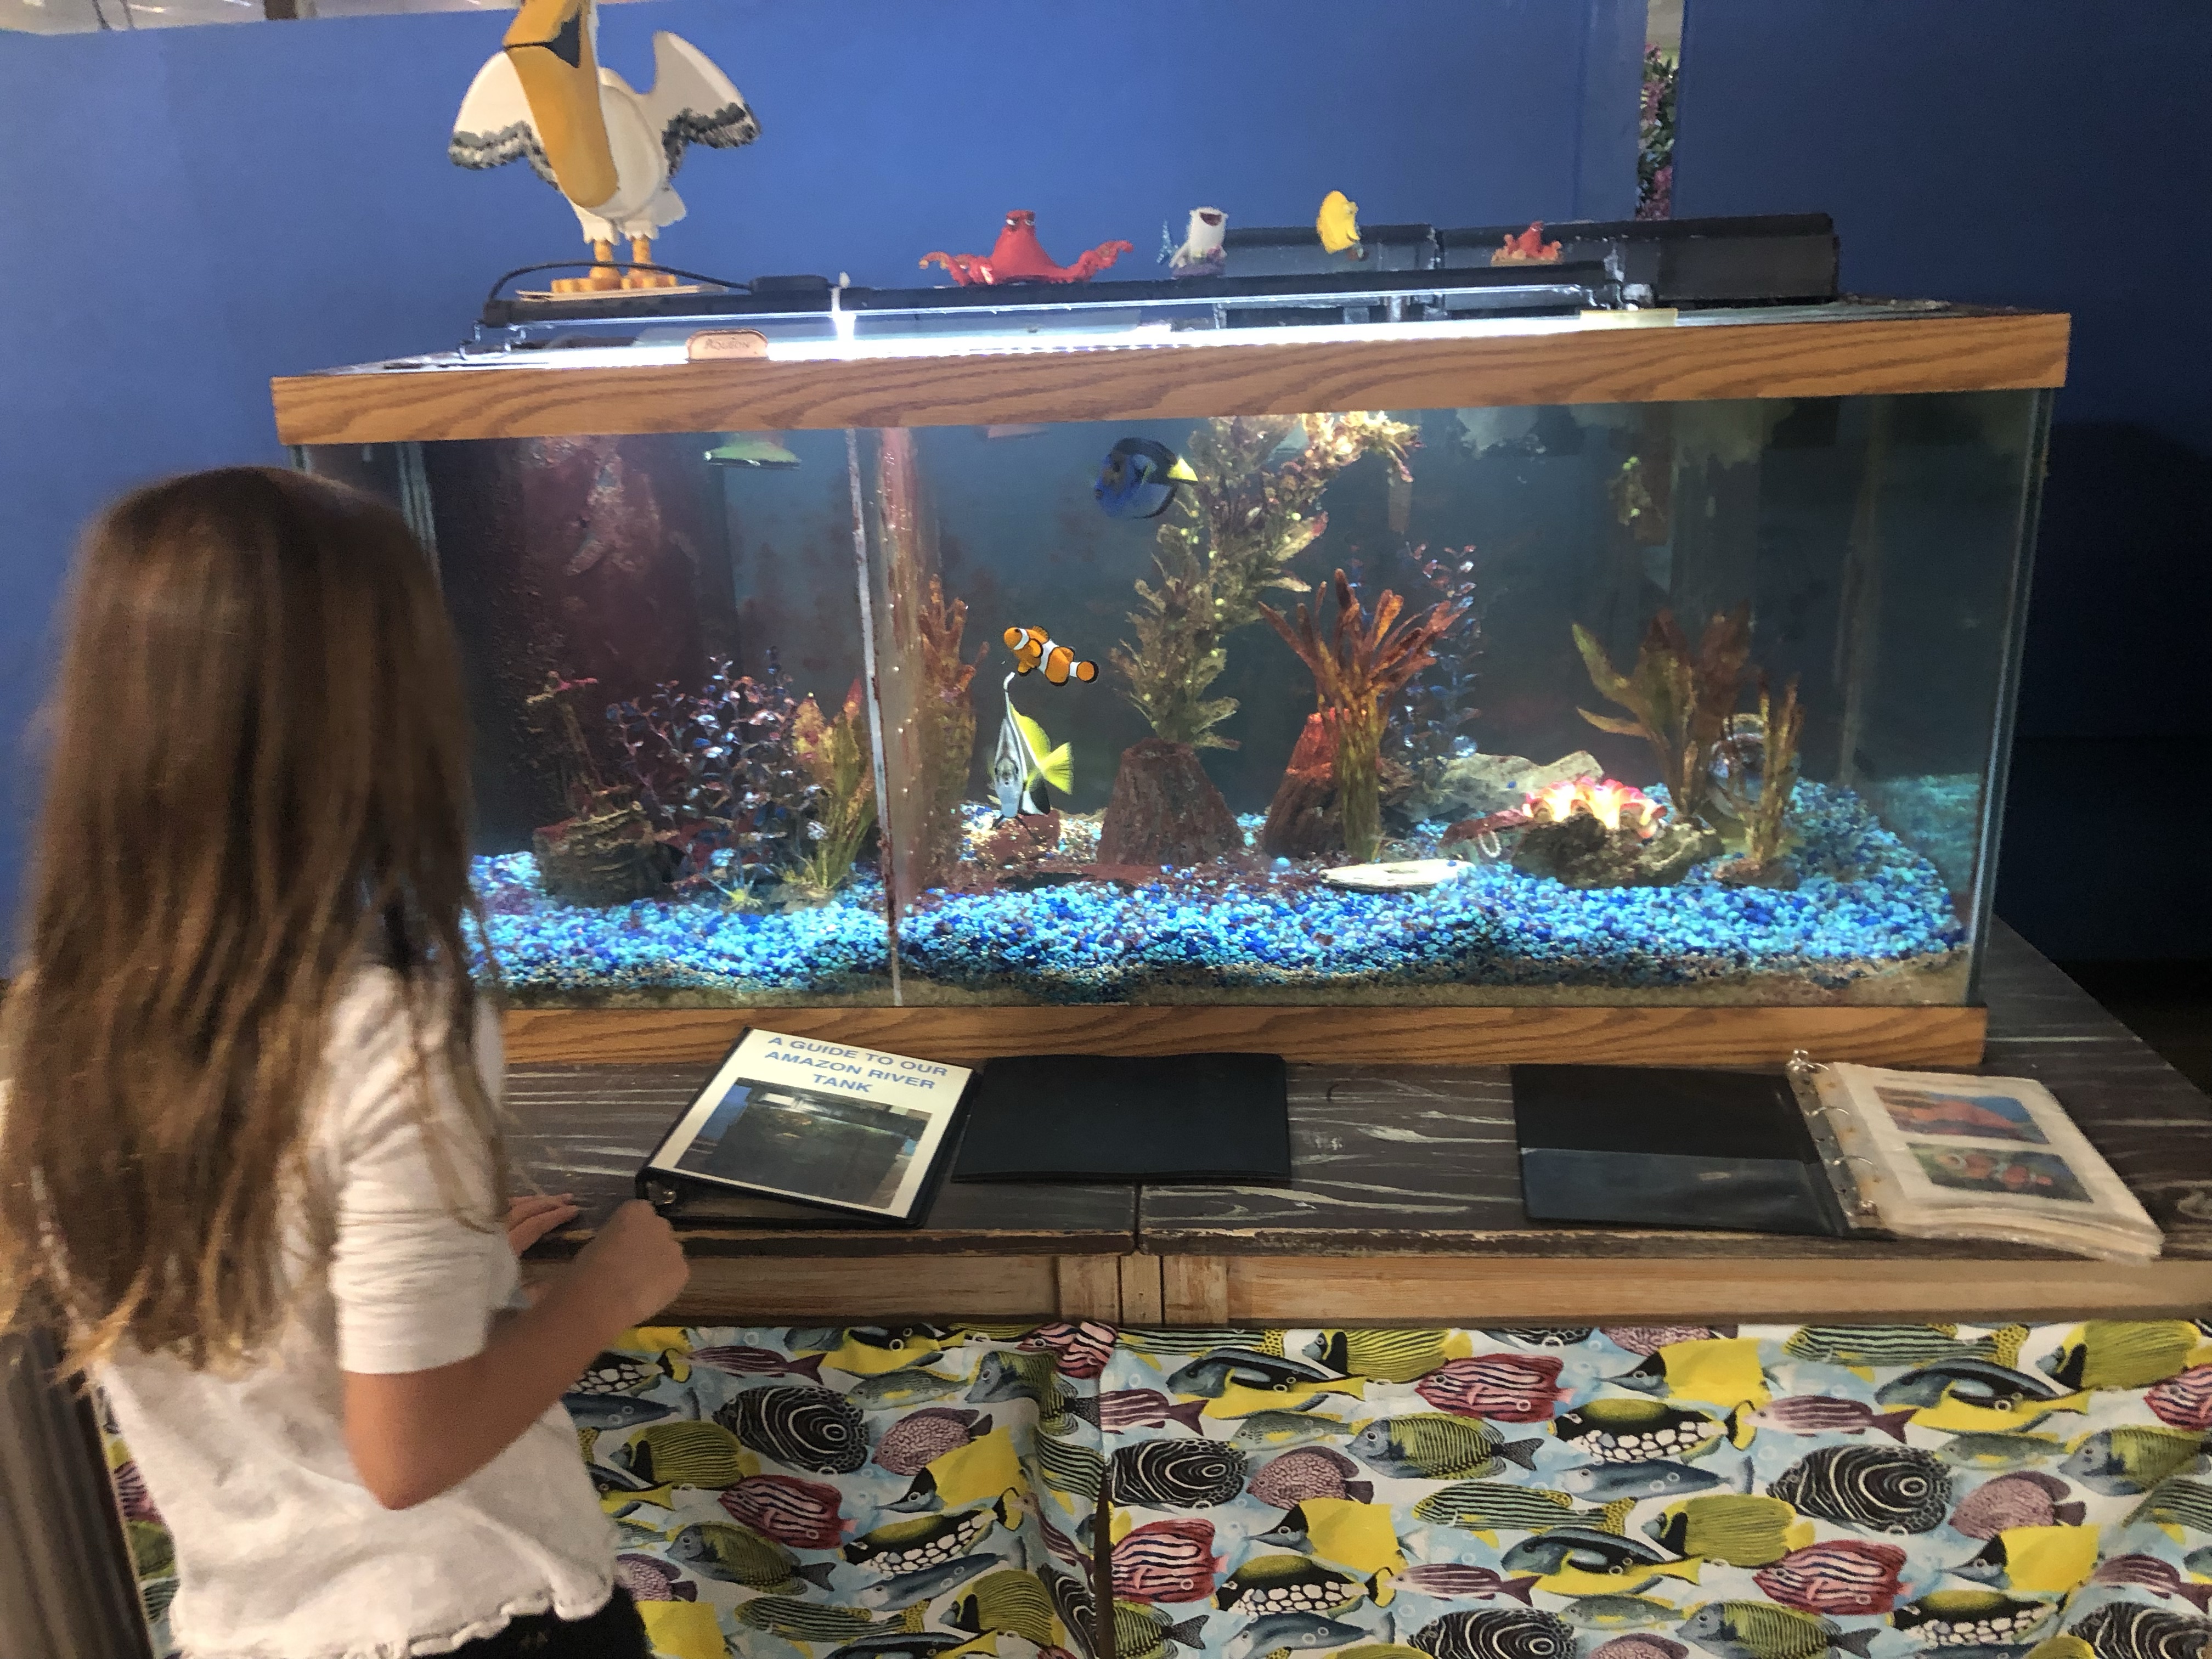 Biomes aquarium and educational center in North Kingstown, Rhode Island